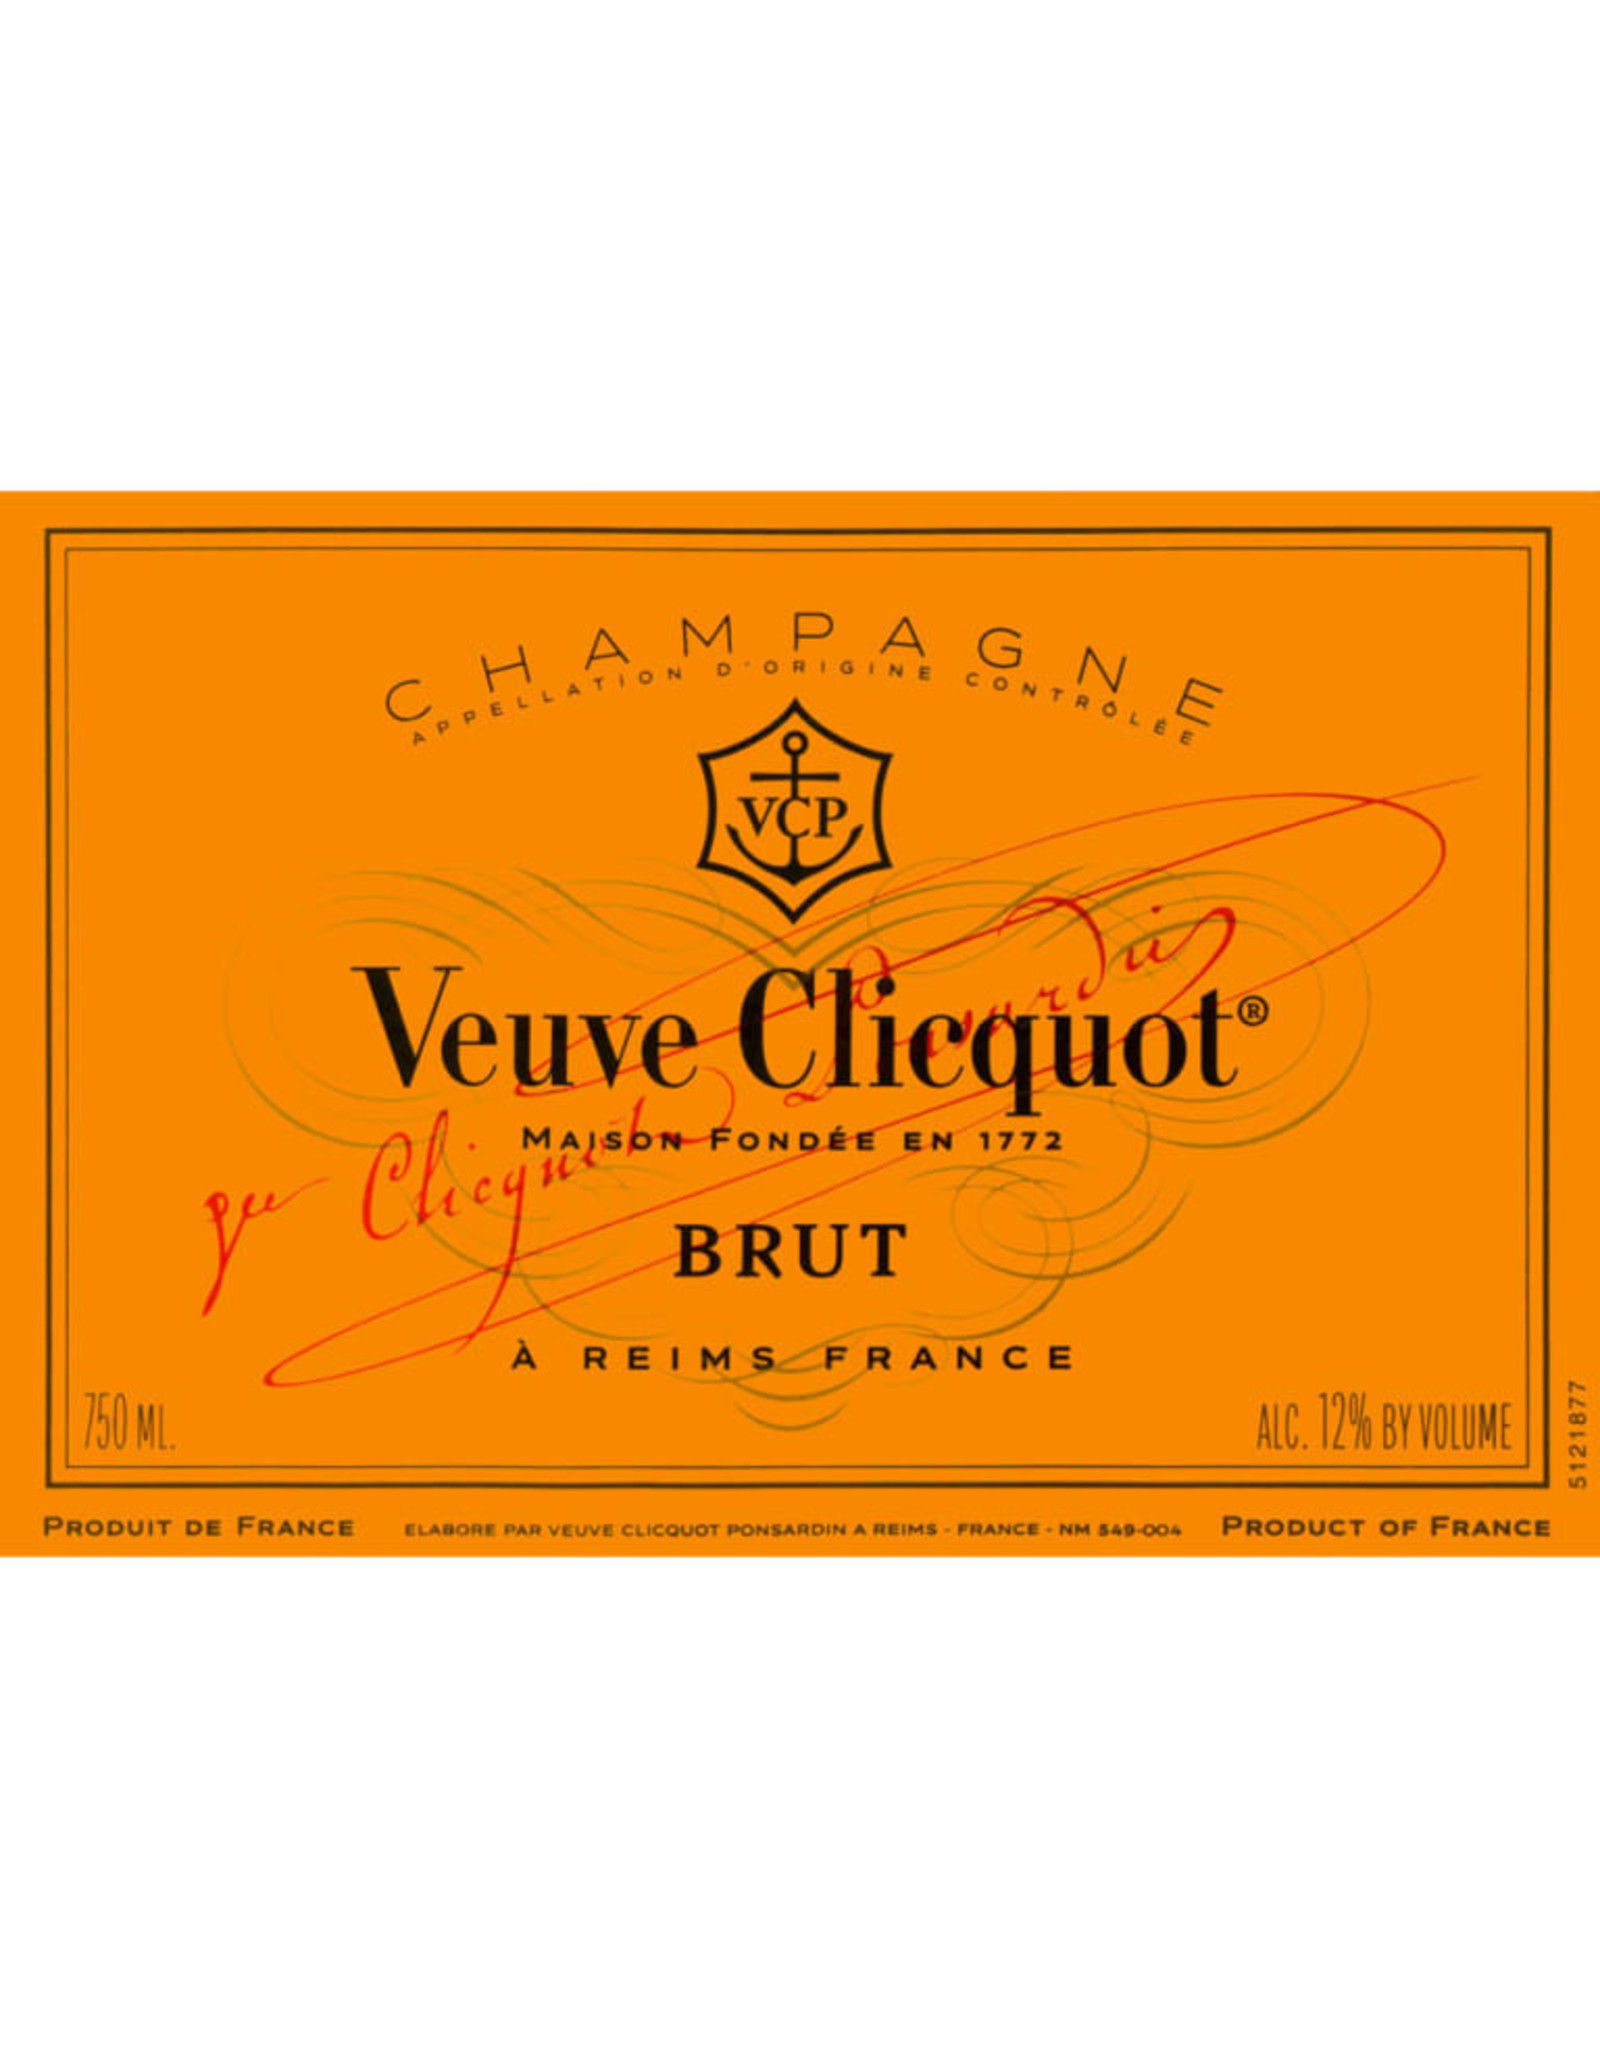 Veuve Clicquot Ponsardin Yellow Label Brut Champagne 750ml Bottle